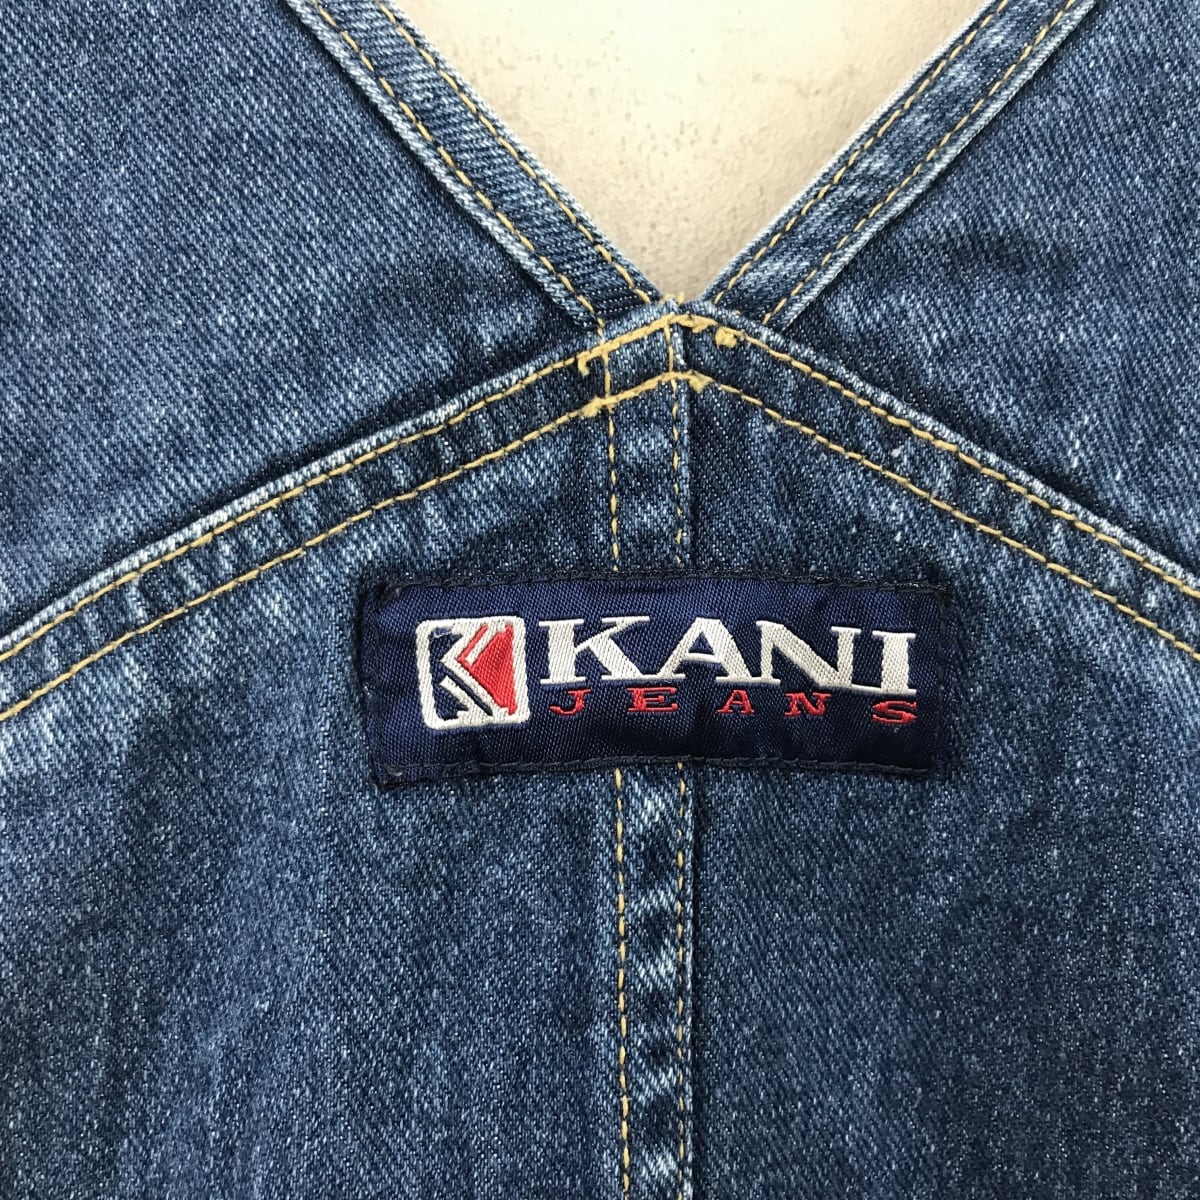 KARL KANI カールカナイ 90年代 デニム オーバーオール ロゴ 